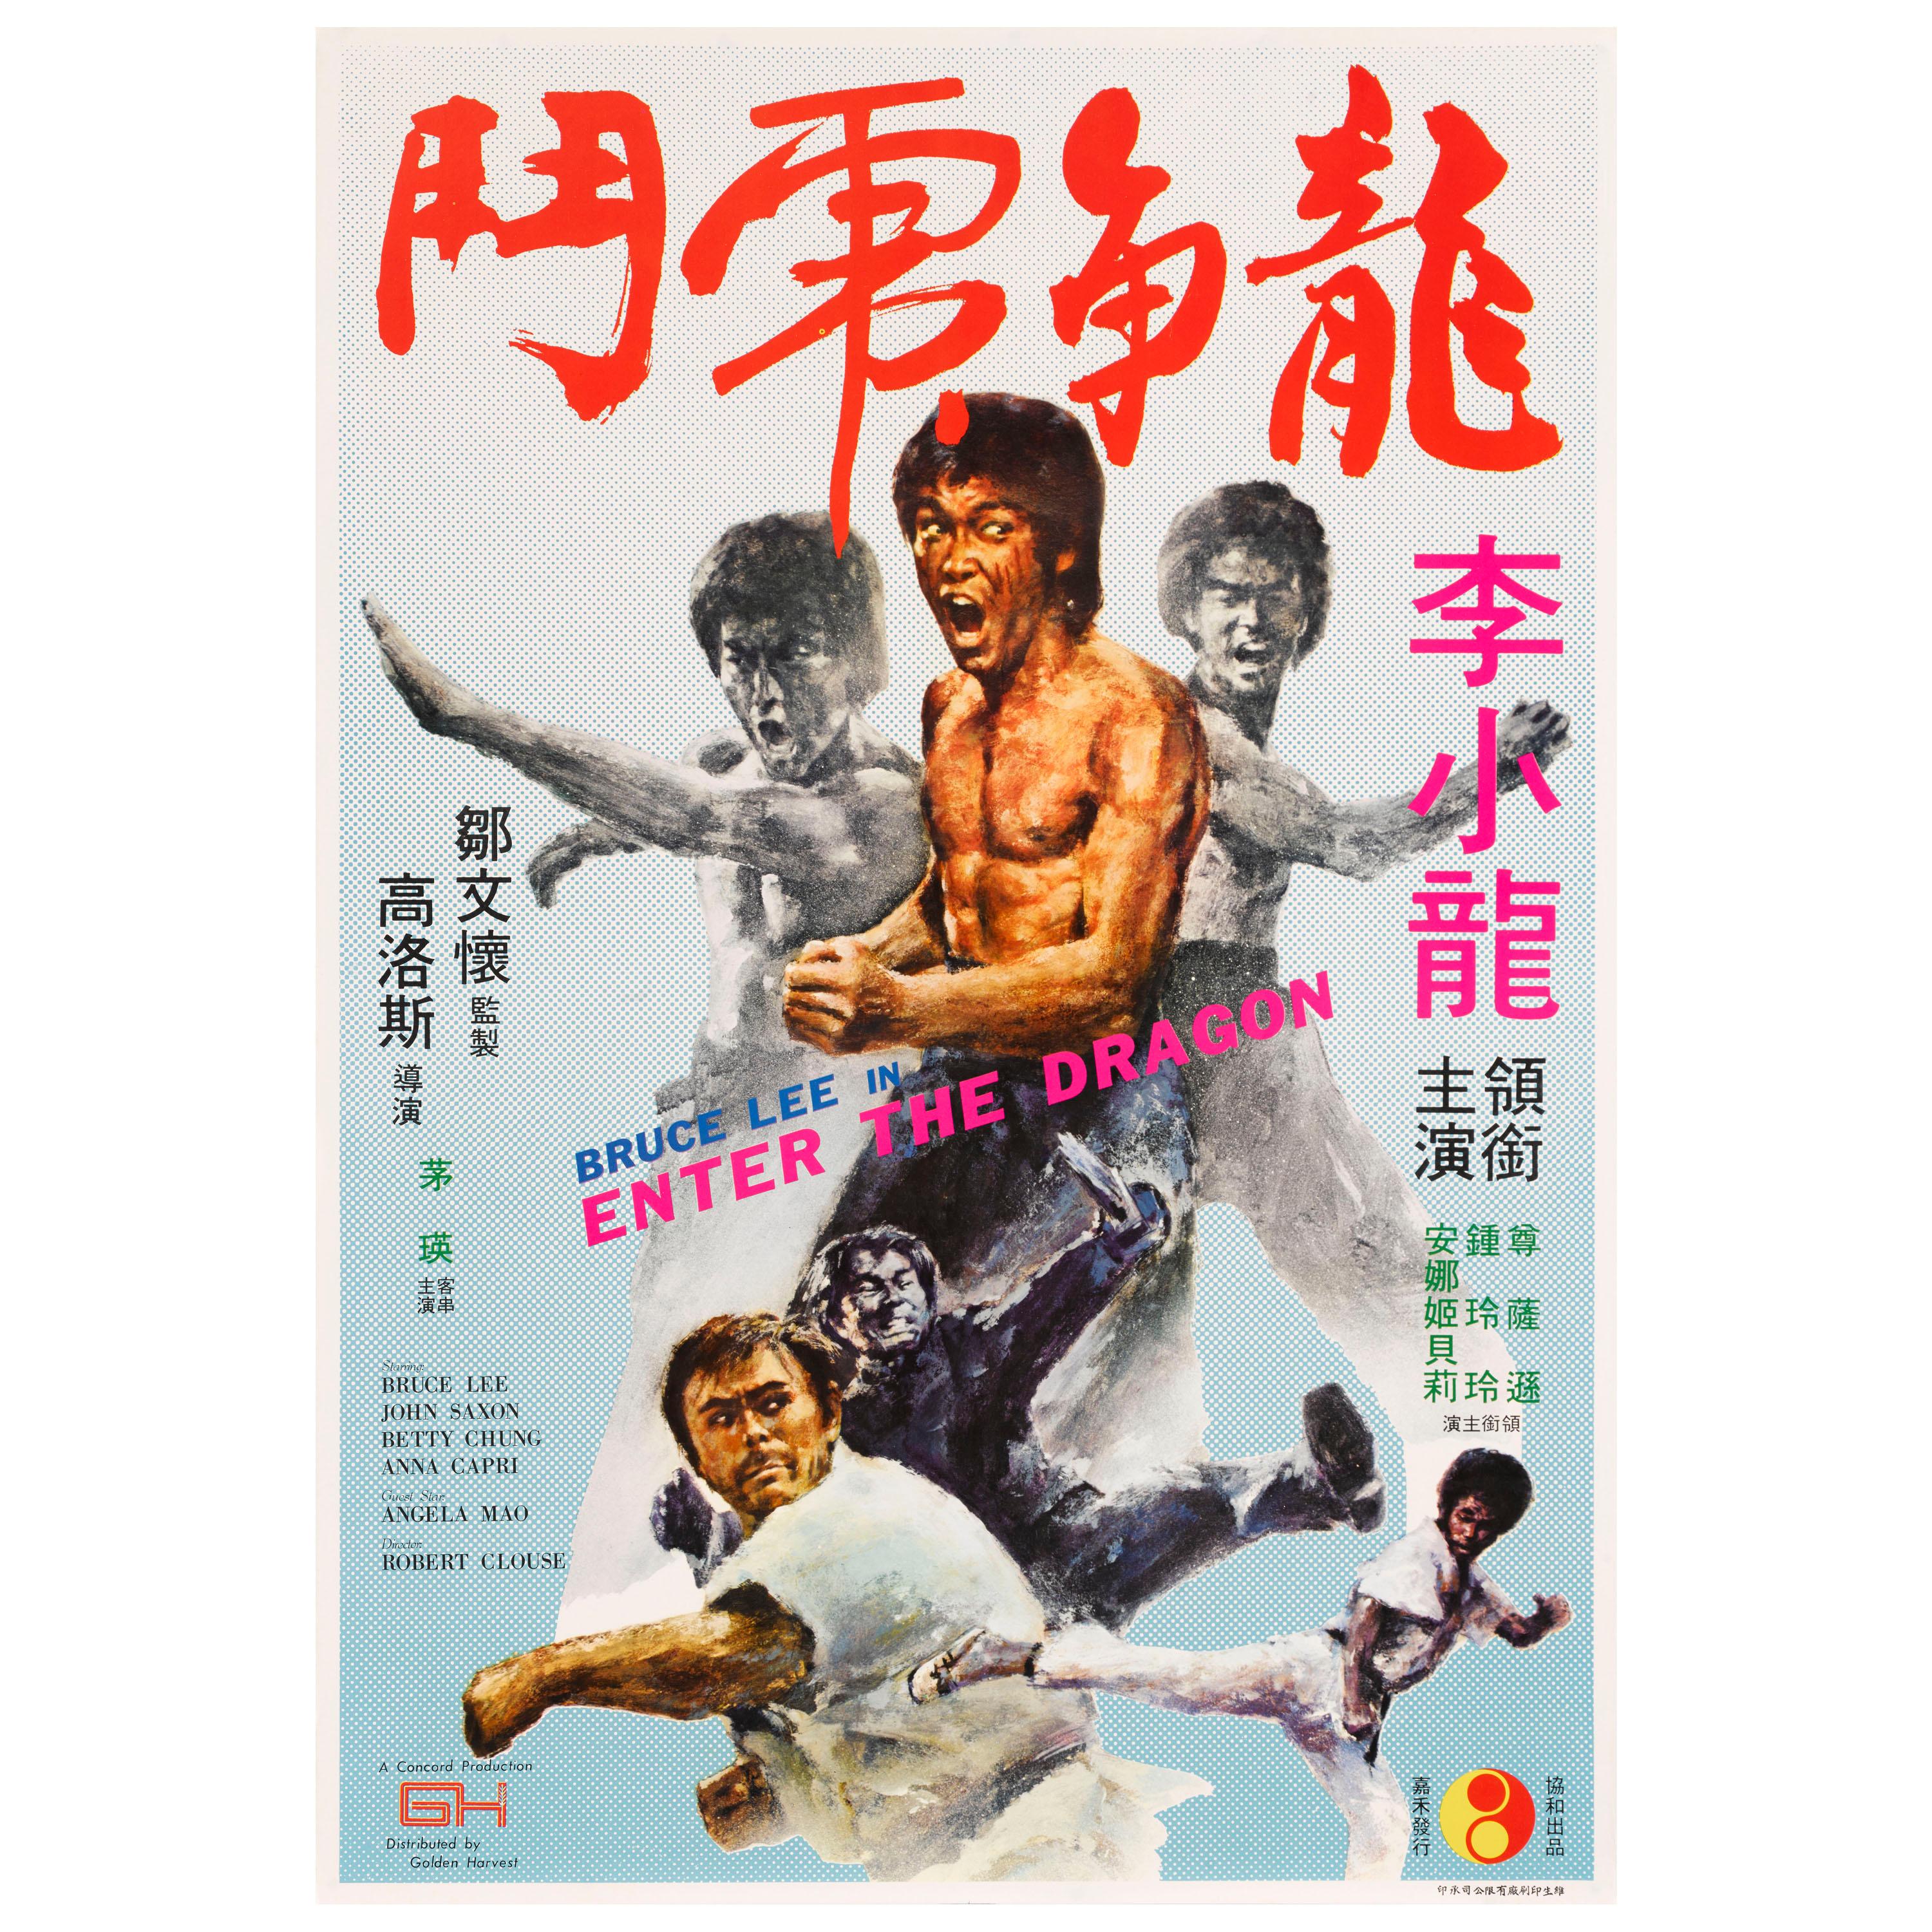 "Enter the Dragon" Original Hong Kong Film Poster